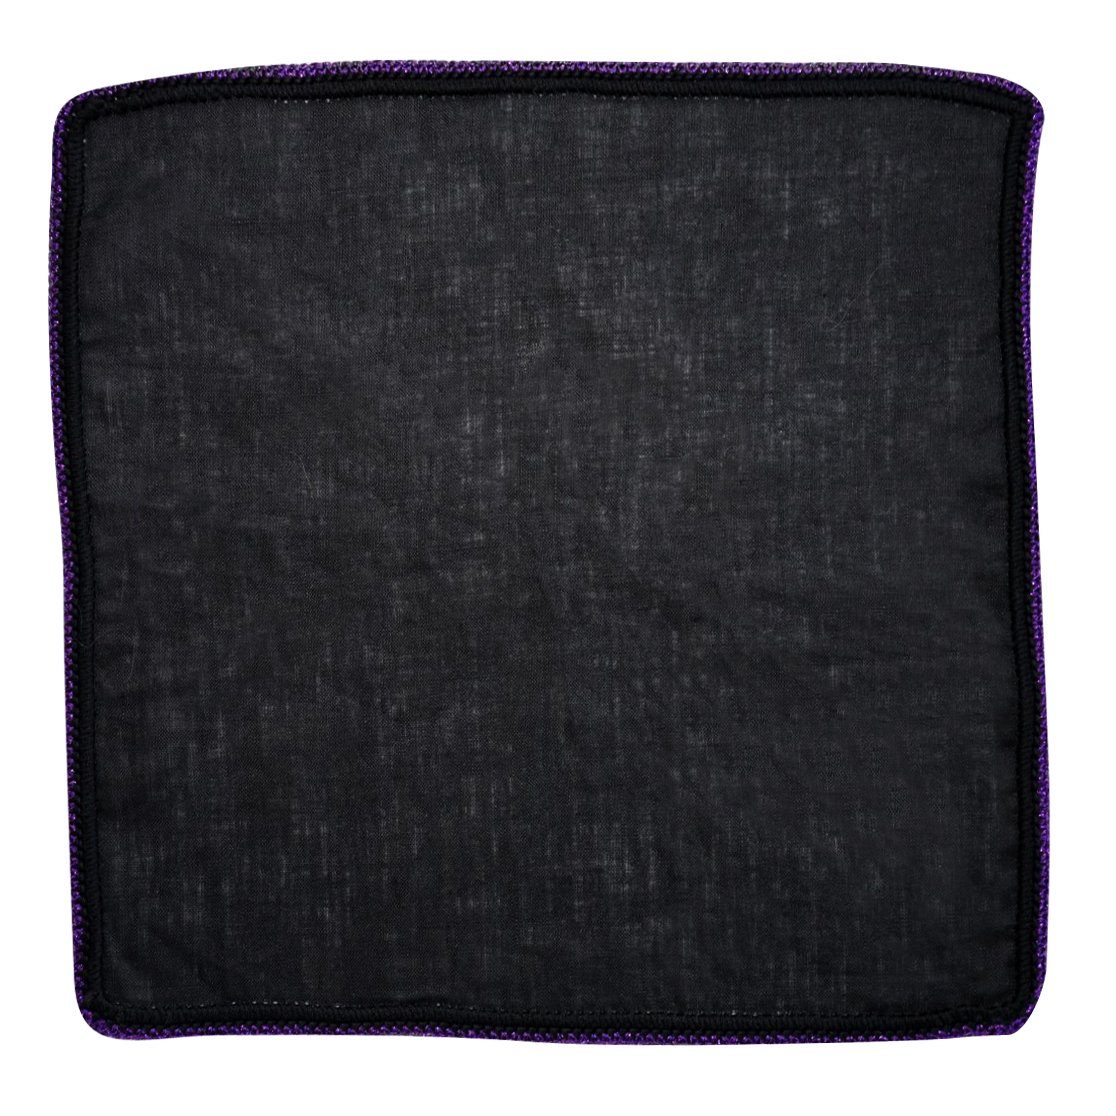 Black Raso with Purple Flake Signature Border